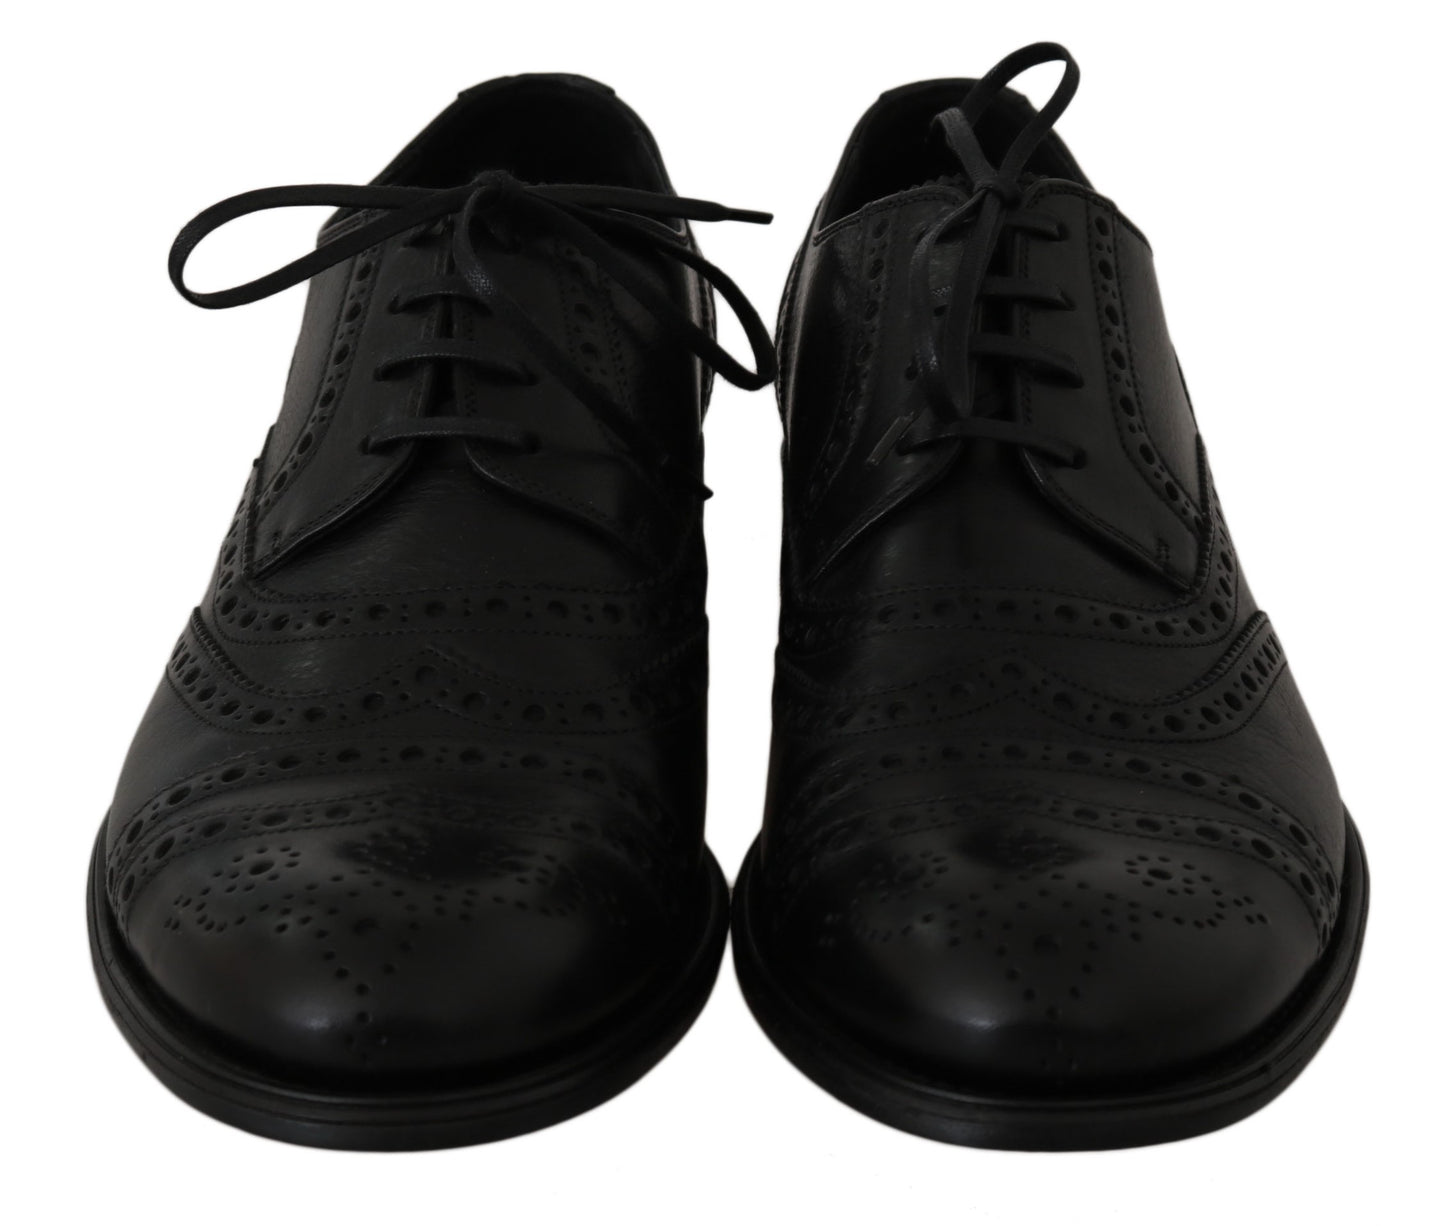 Black Leather Wingtip Oxford Dress Shoes